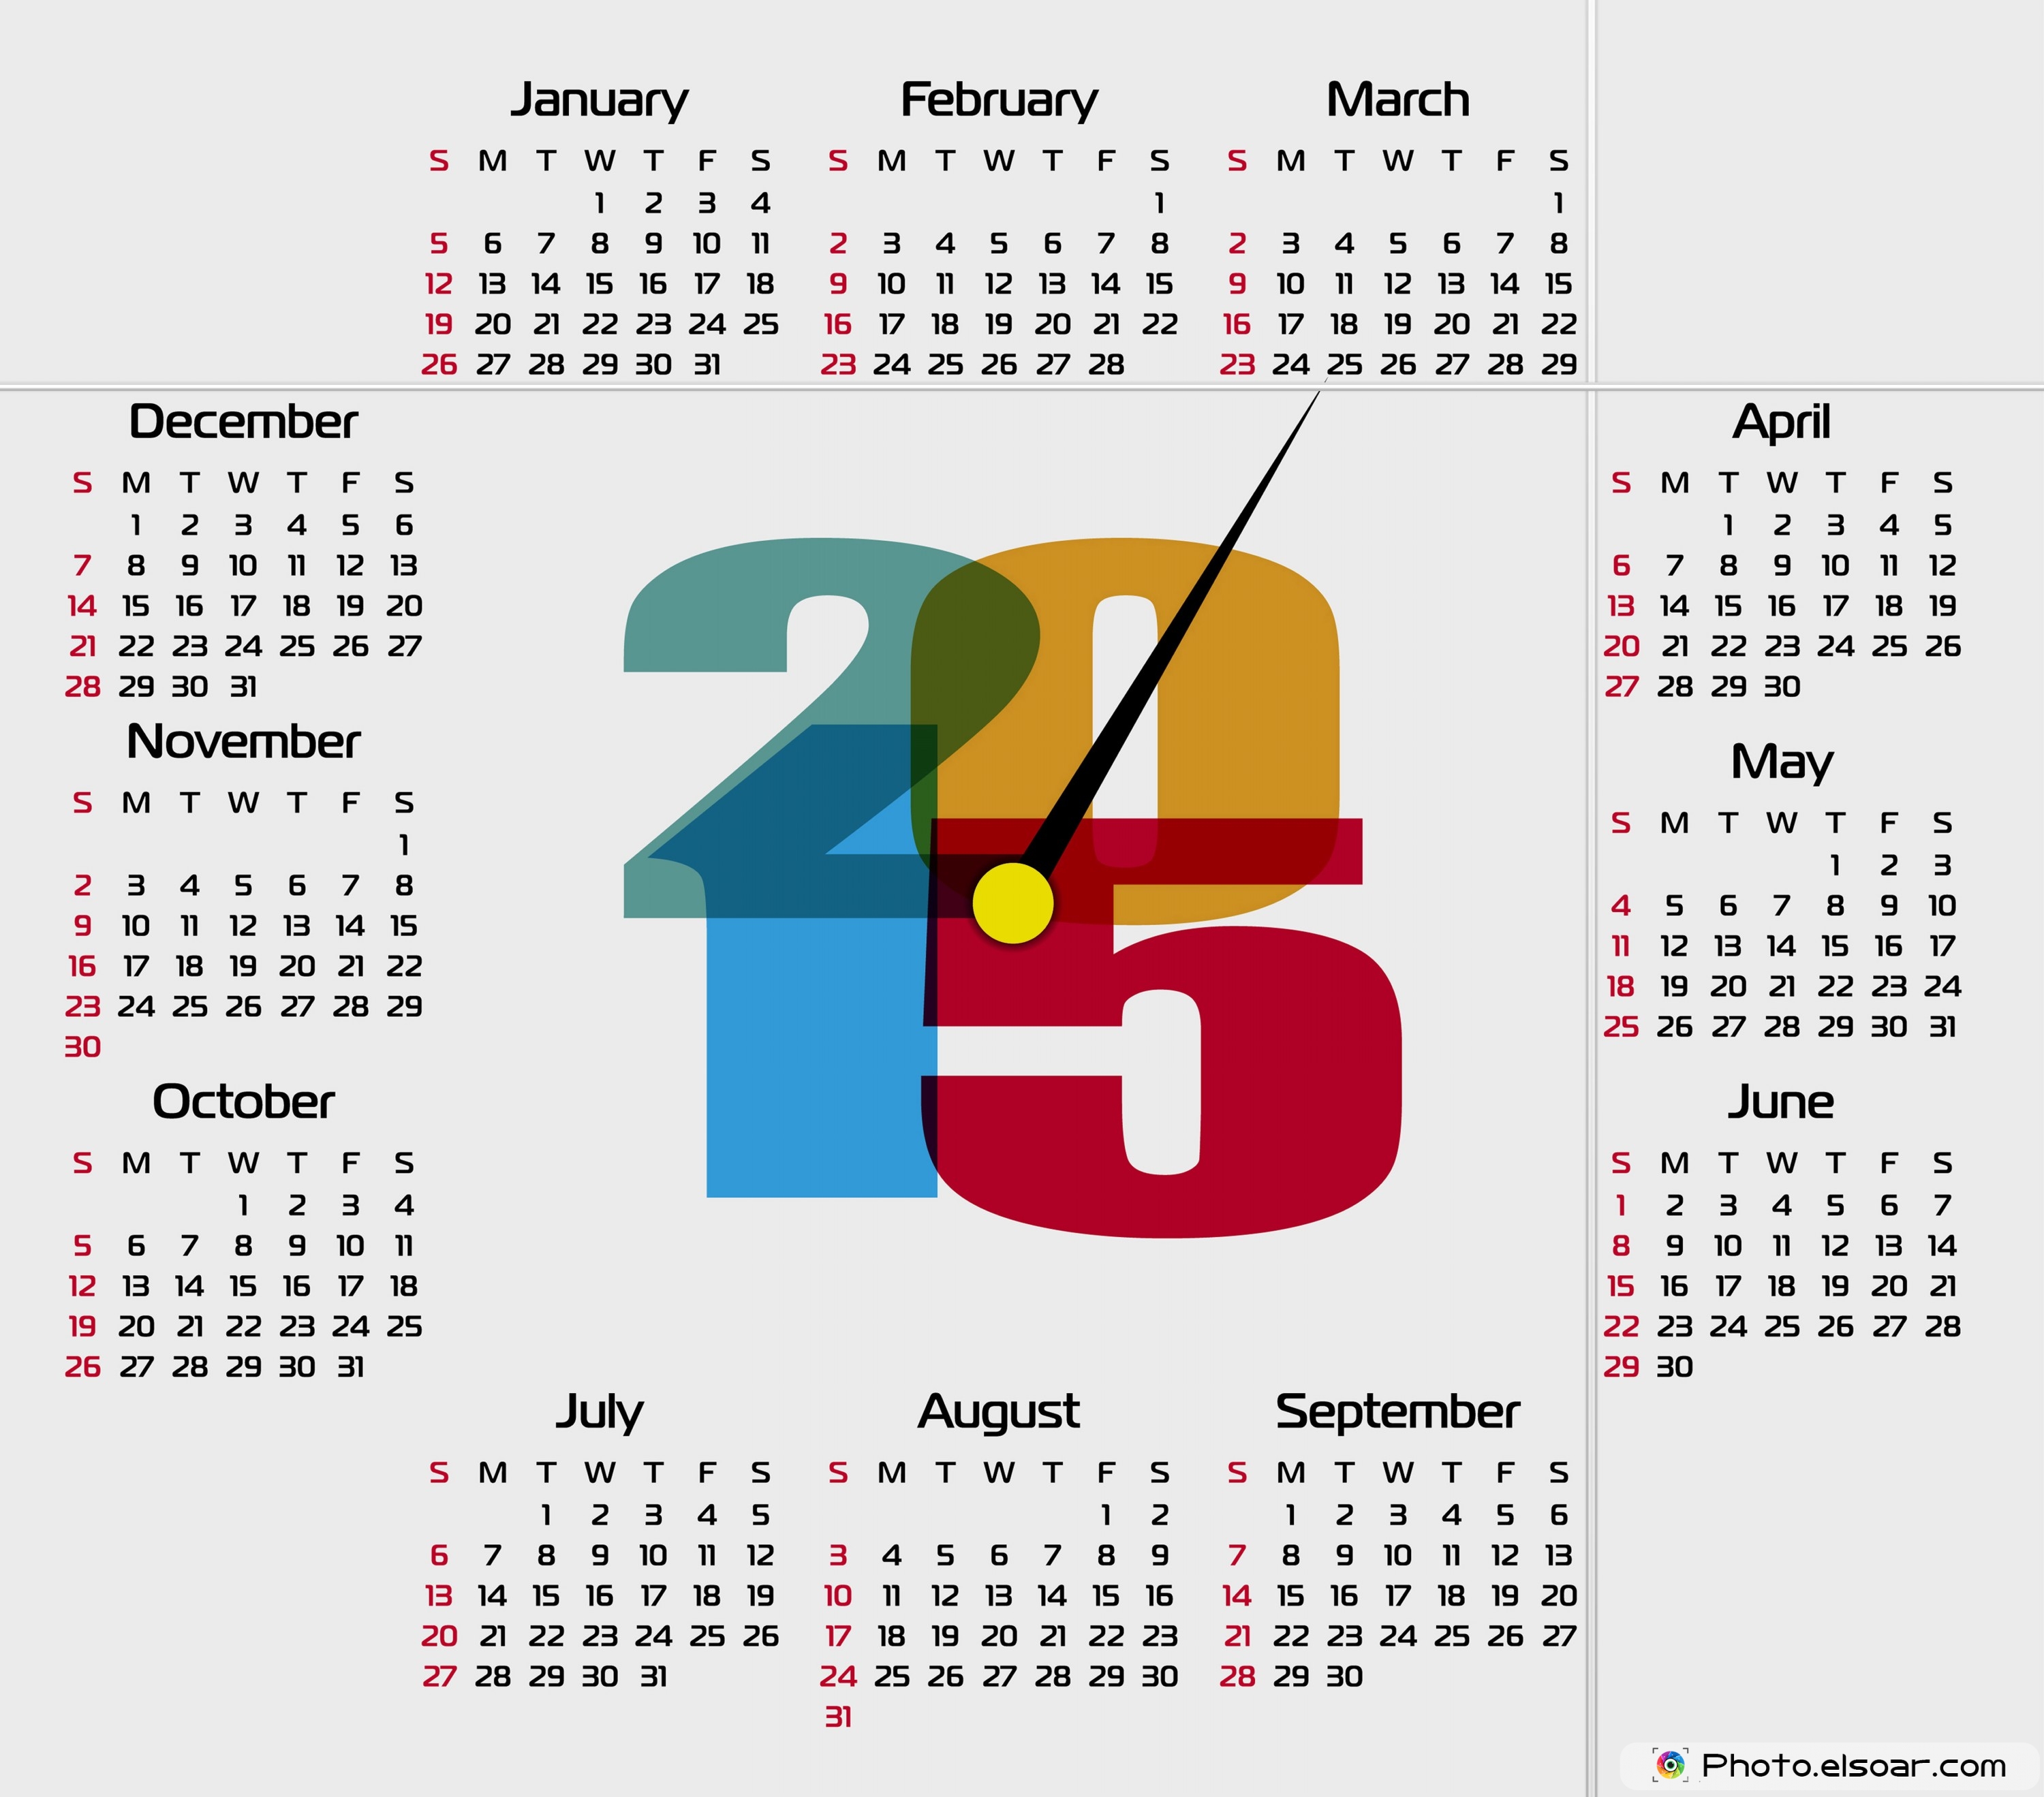 2015 calendar template photoshop download